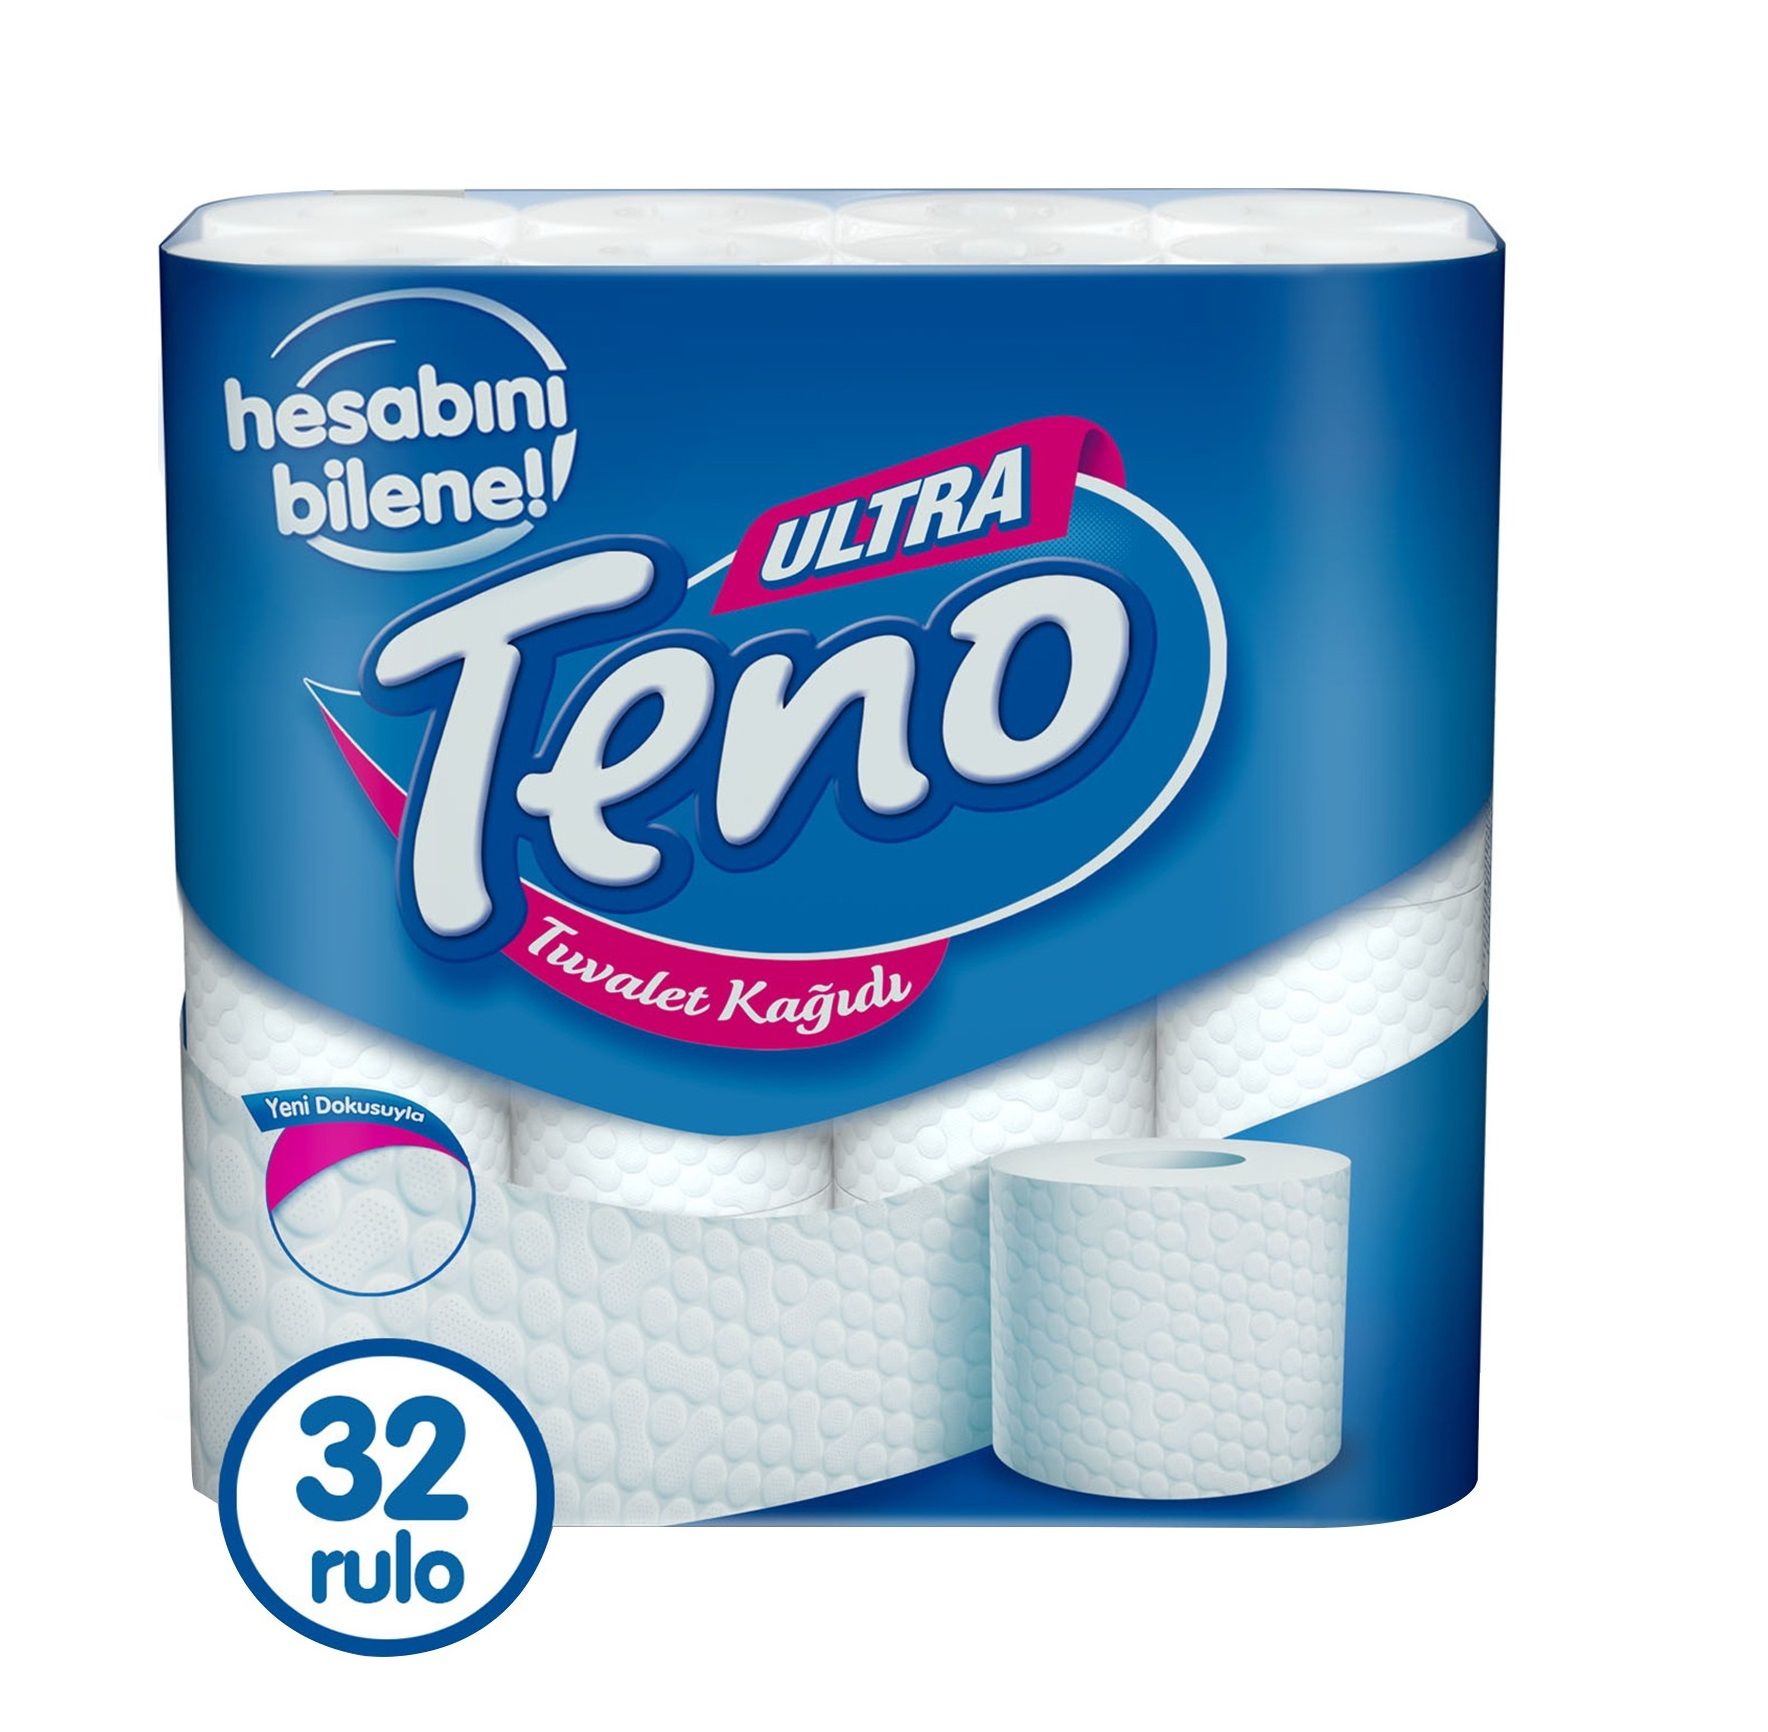 Teno Tuvalet Kağıdı 32 Rulo